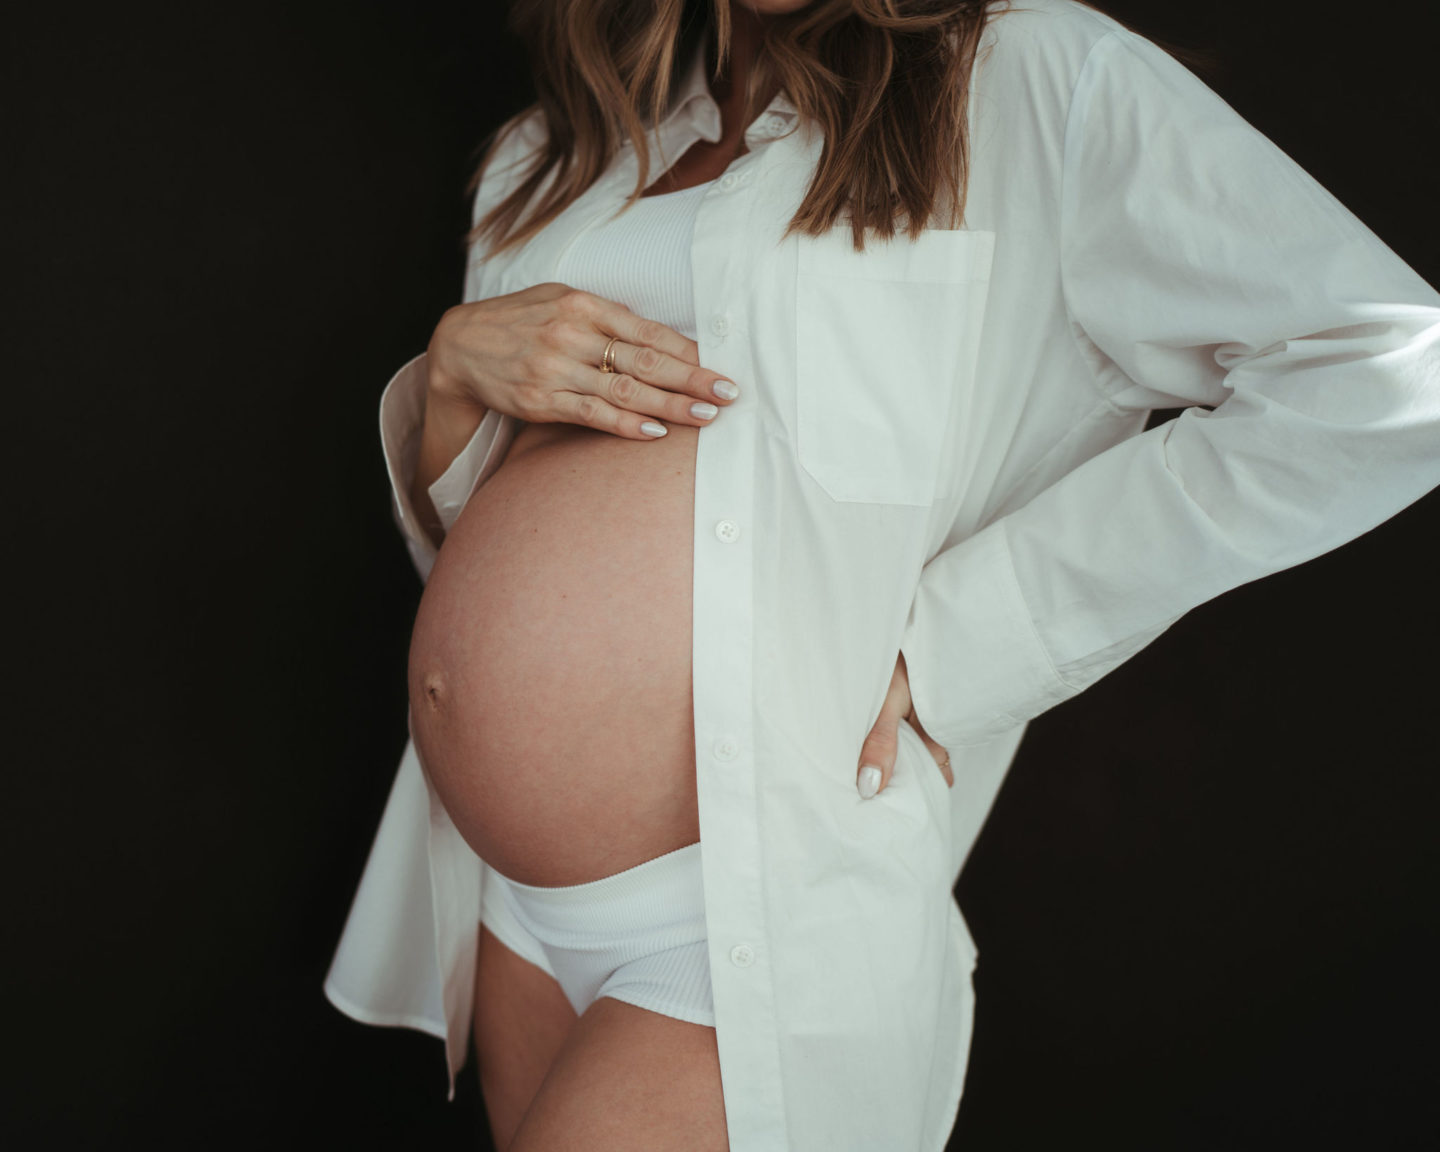 cortney bigelow - seattle maternity shoot - the grey edit - pamela tormanen photo - studio photography